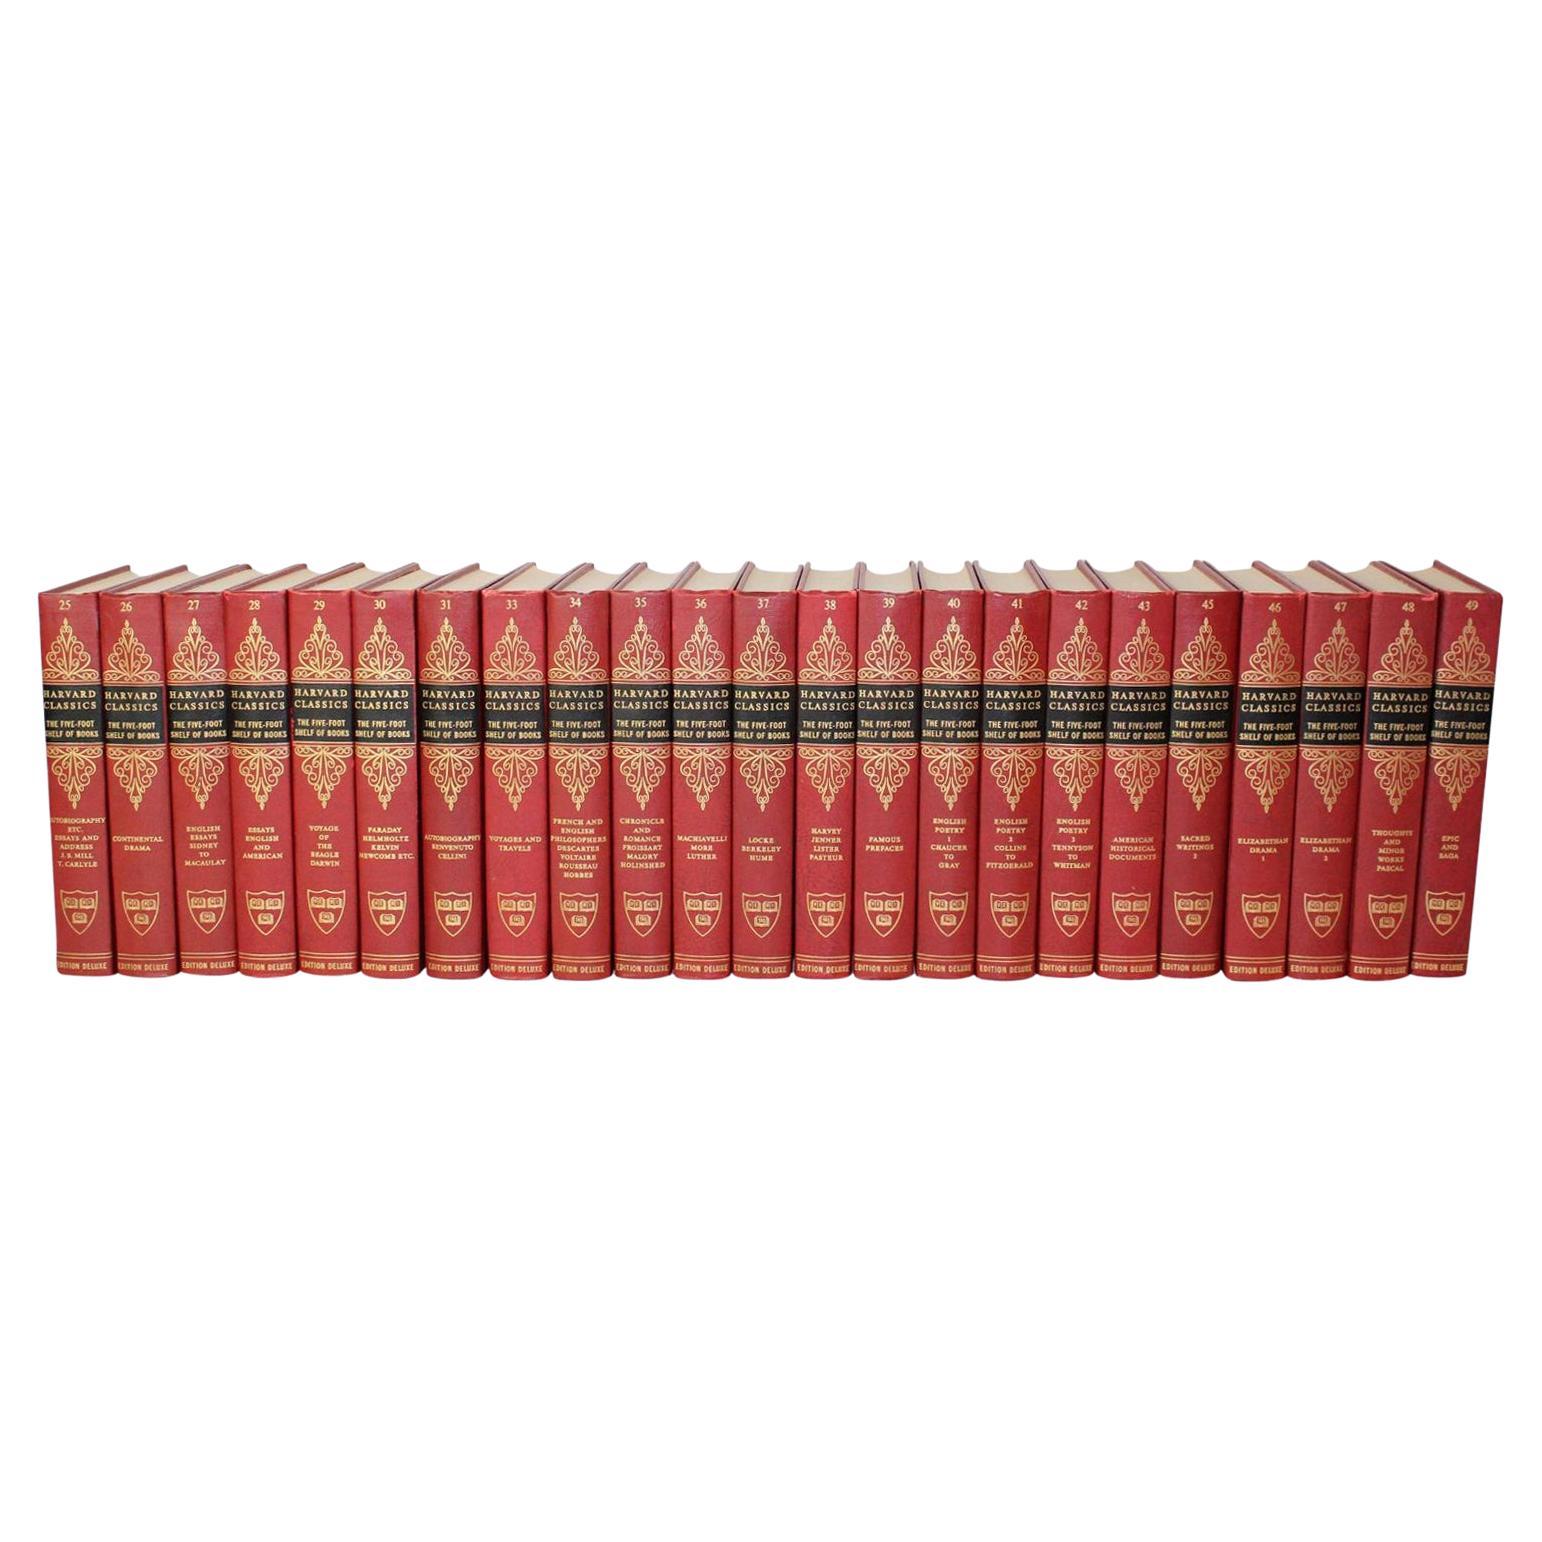 20th Century American Collection of Twenty Five Edition Harvard Classics Books